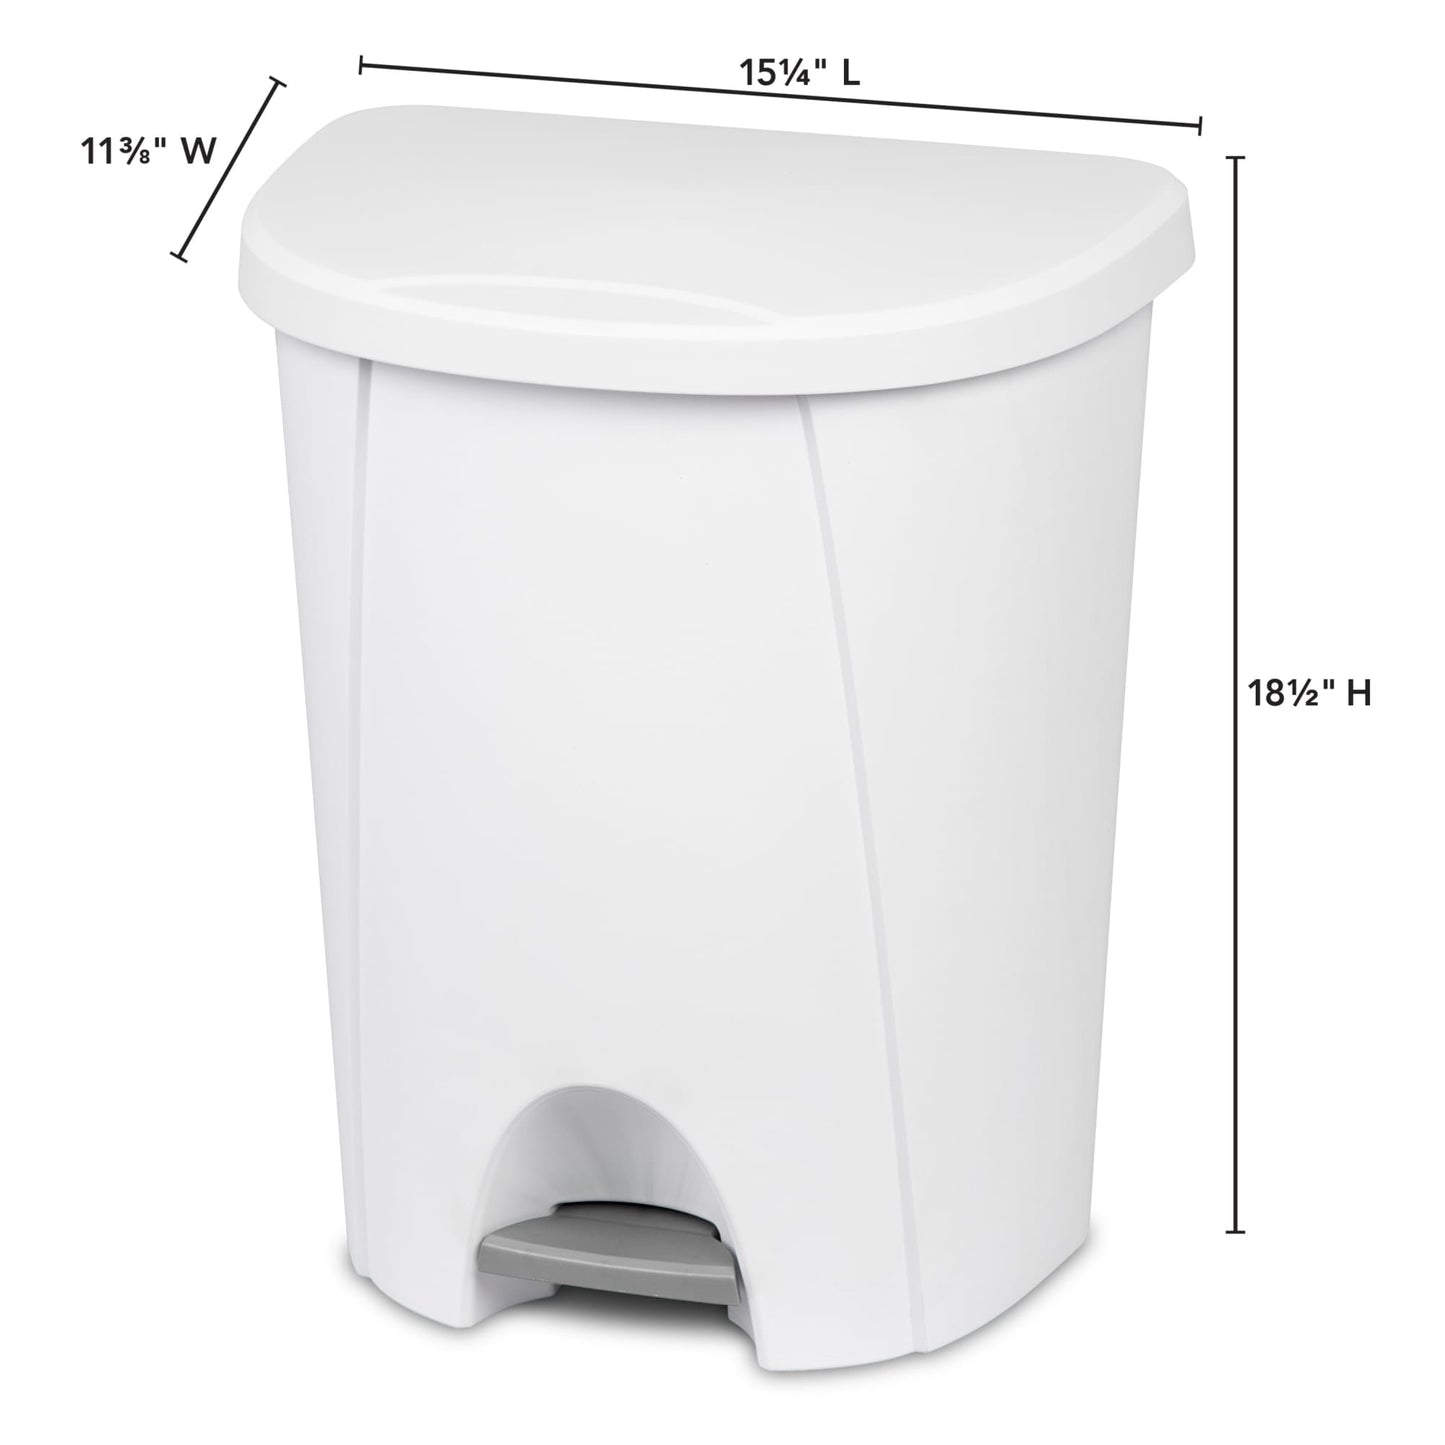 Sterilite 6.6 Gallon / 25 Liter StepOn Wastebasket White